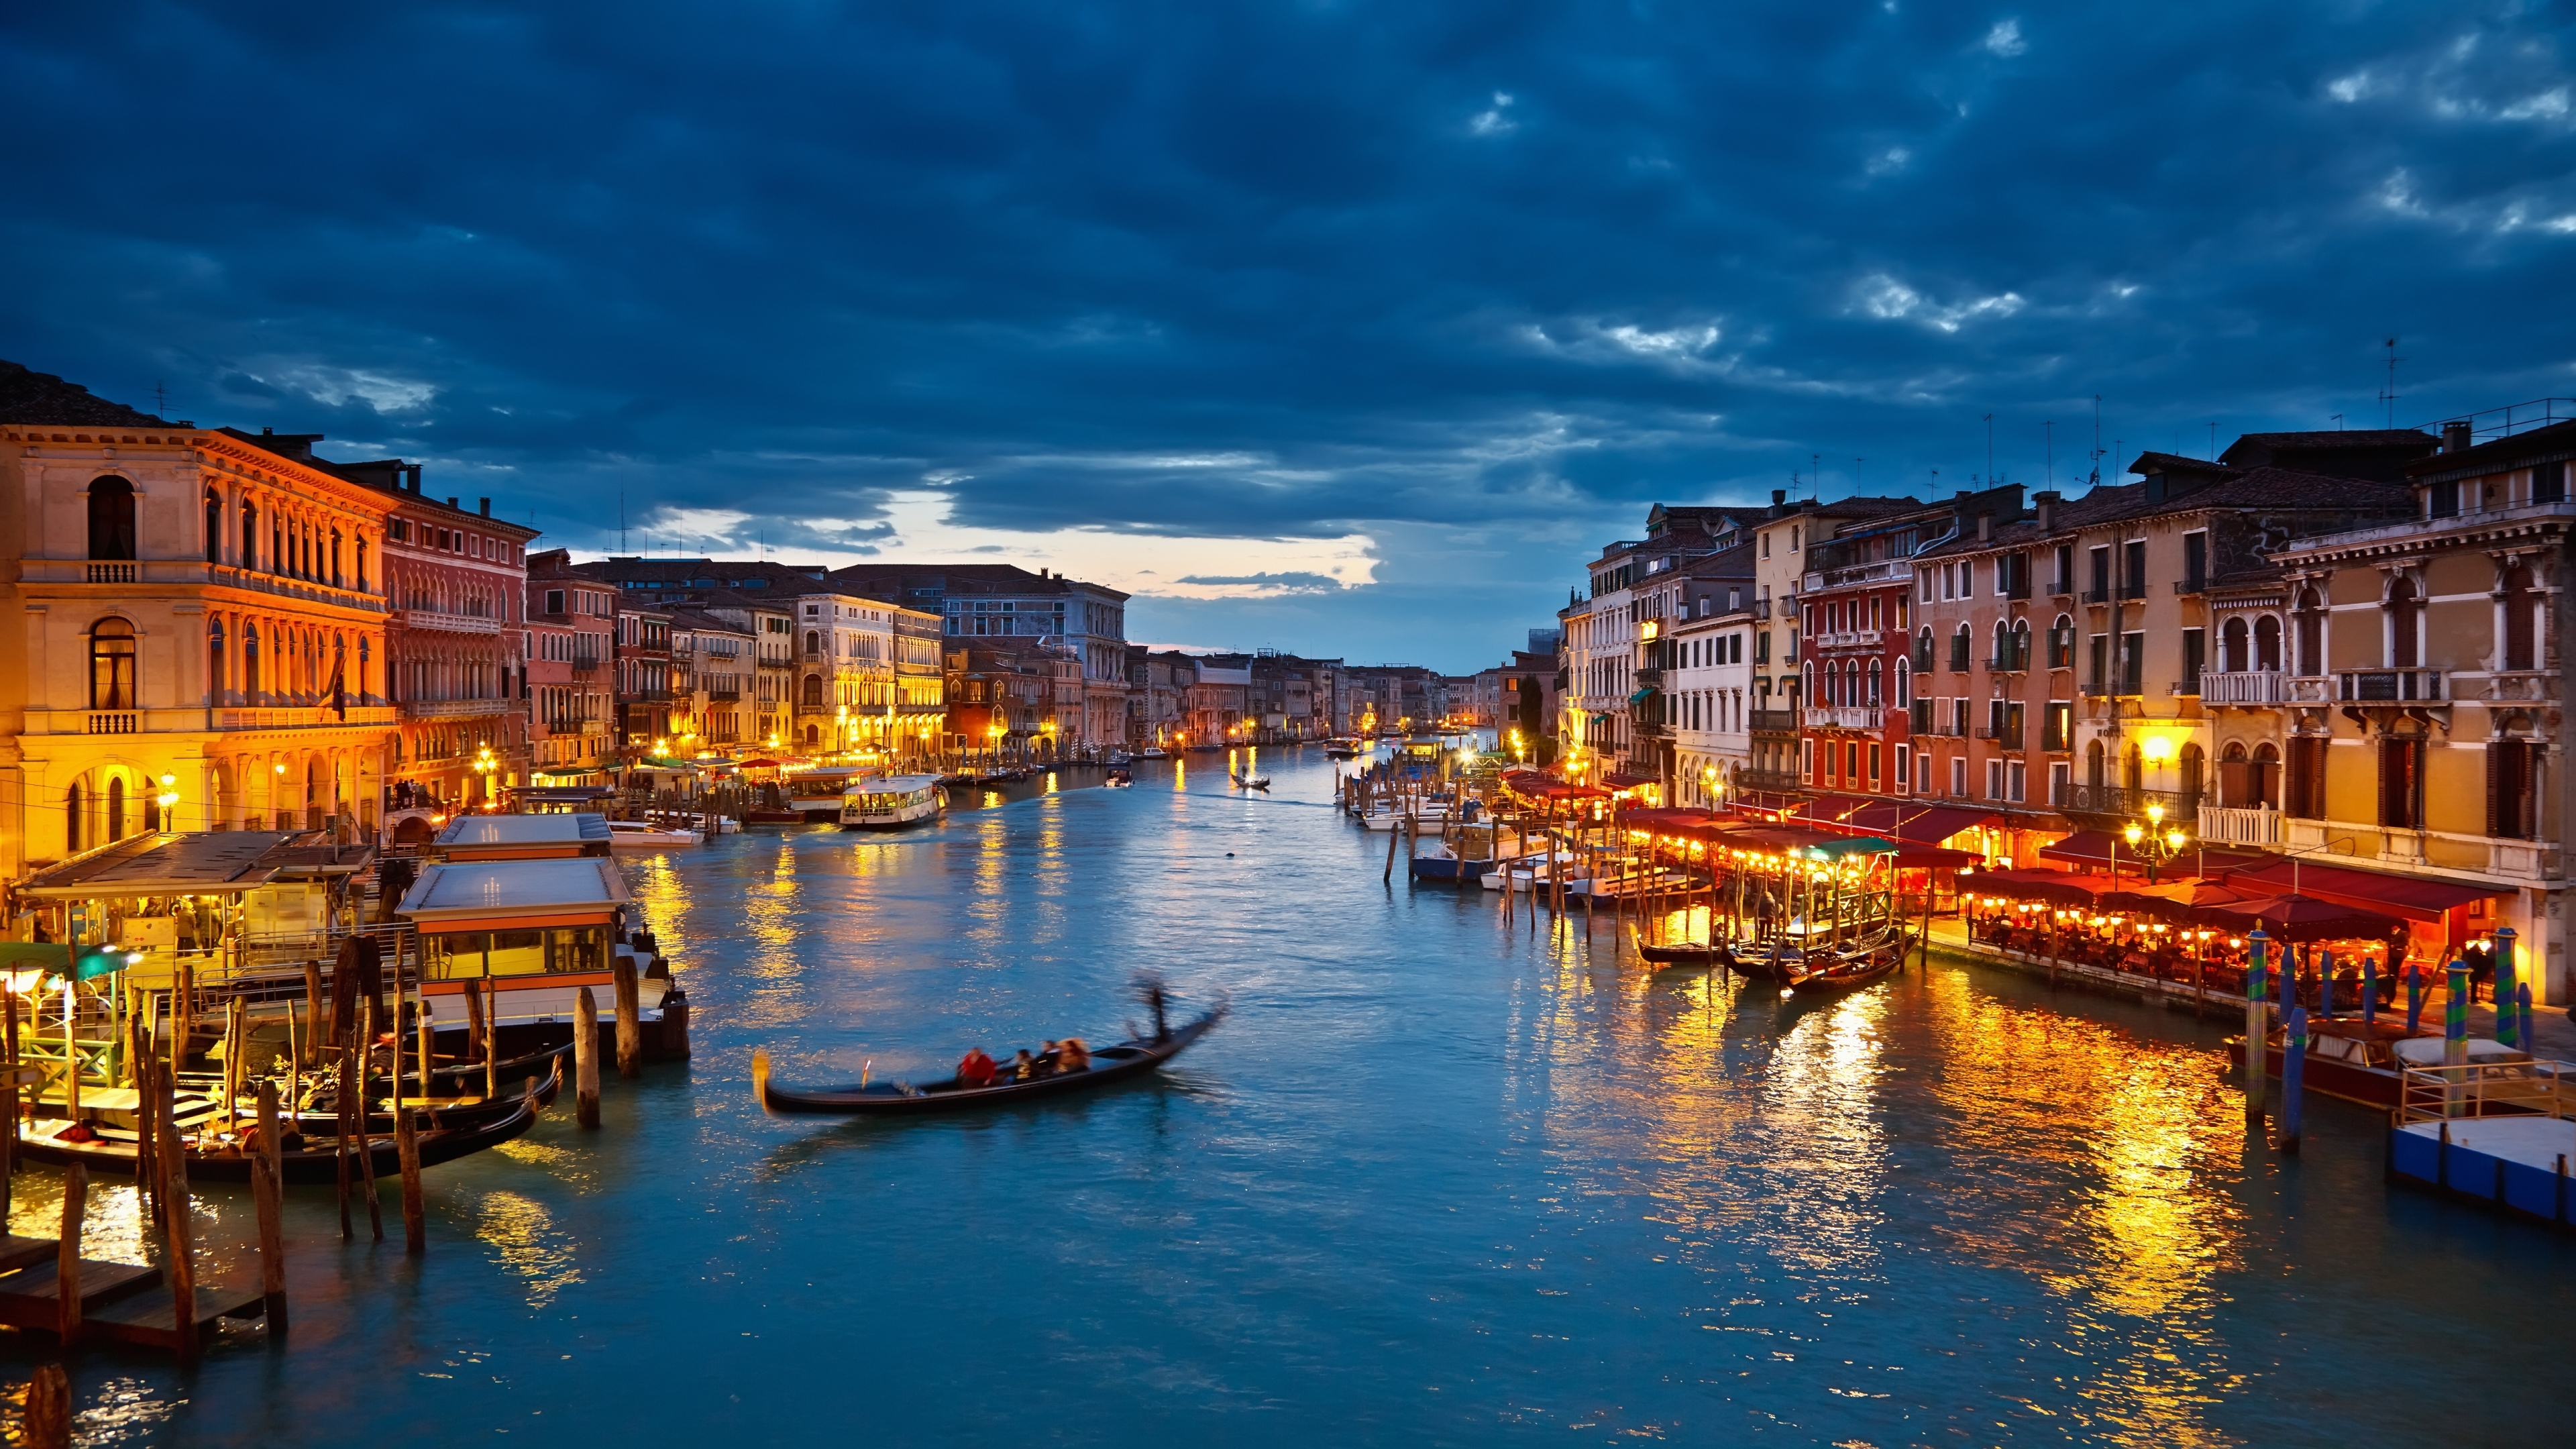 Venice Italy for 3840 x 2160 4K Ultra HDTV resolution